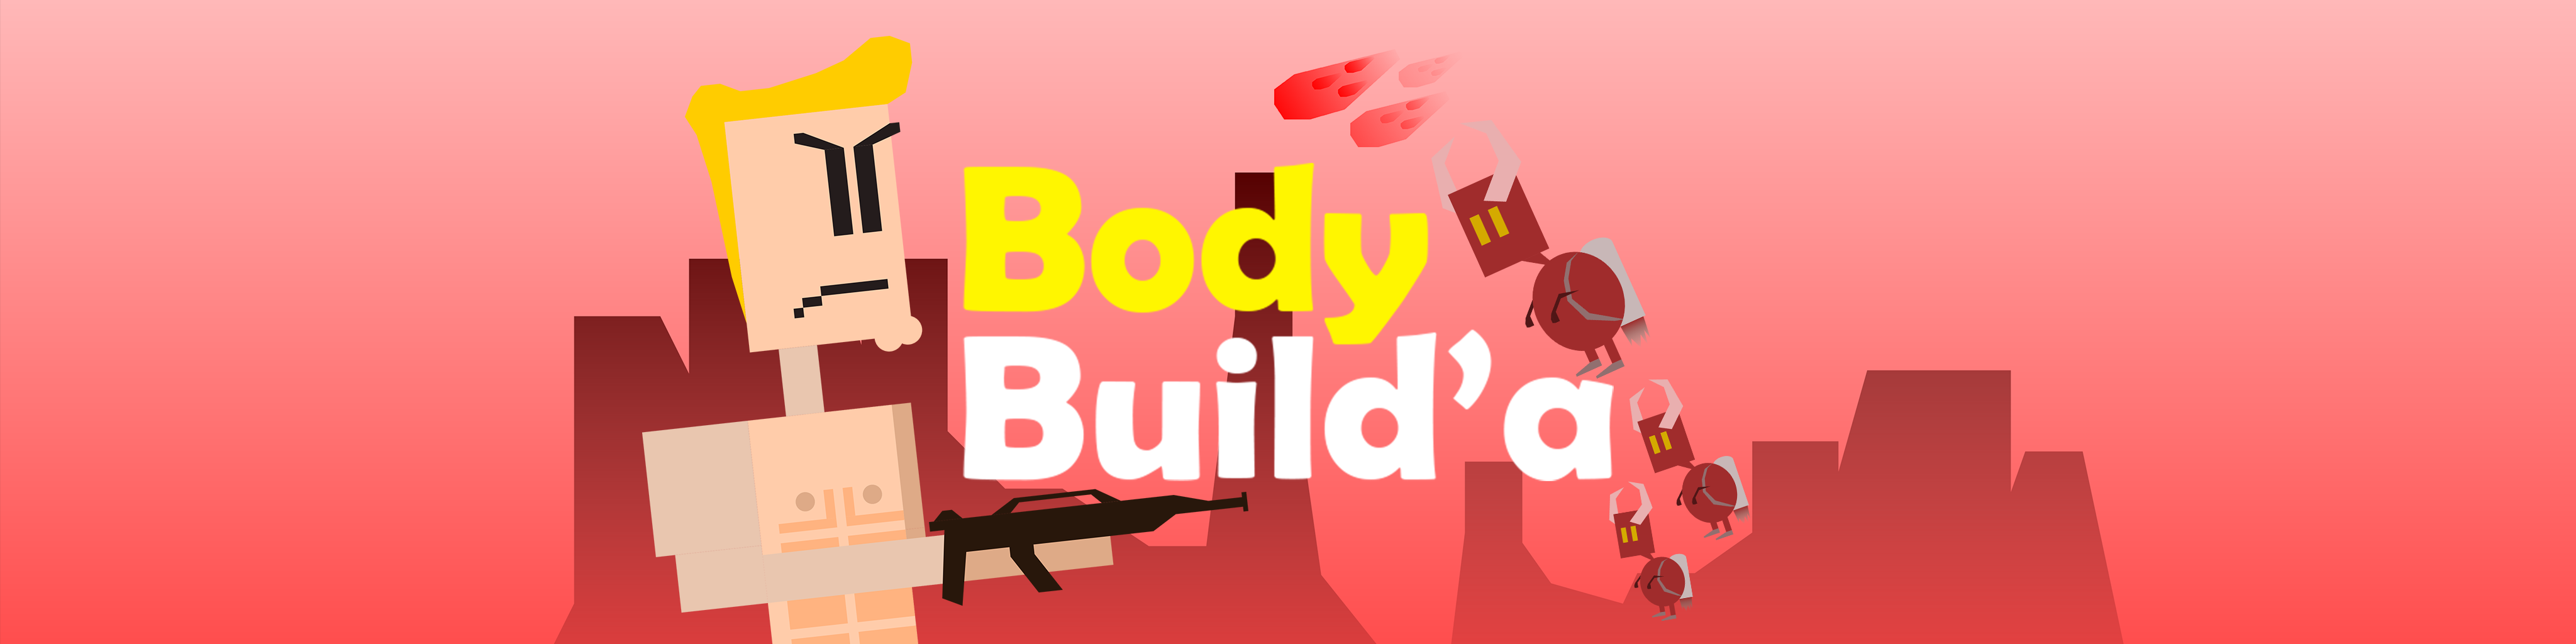 Body Build'a